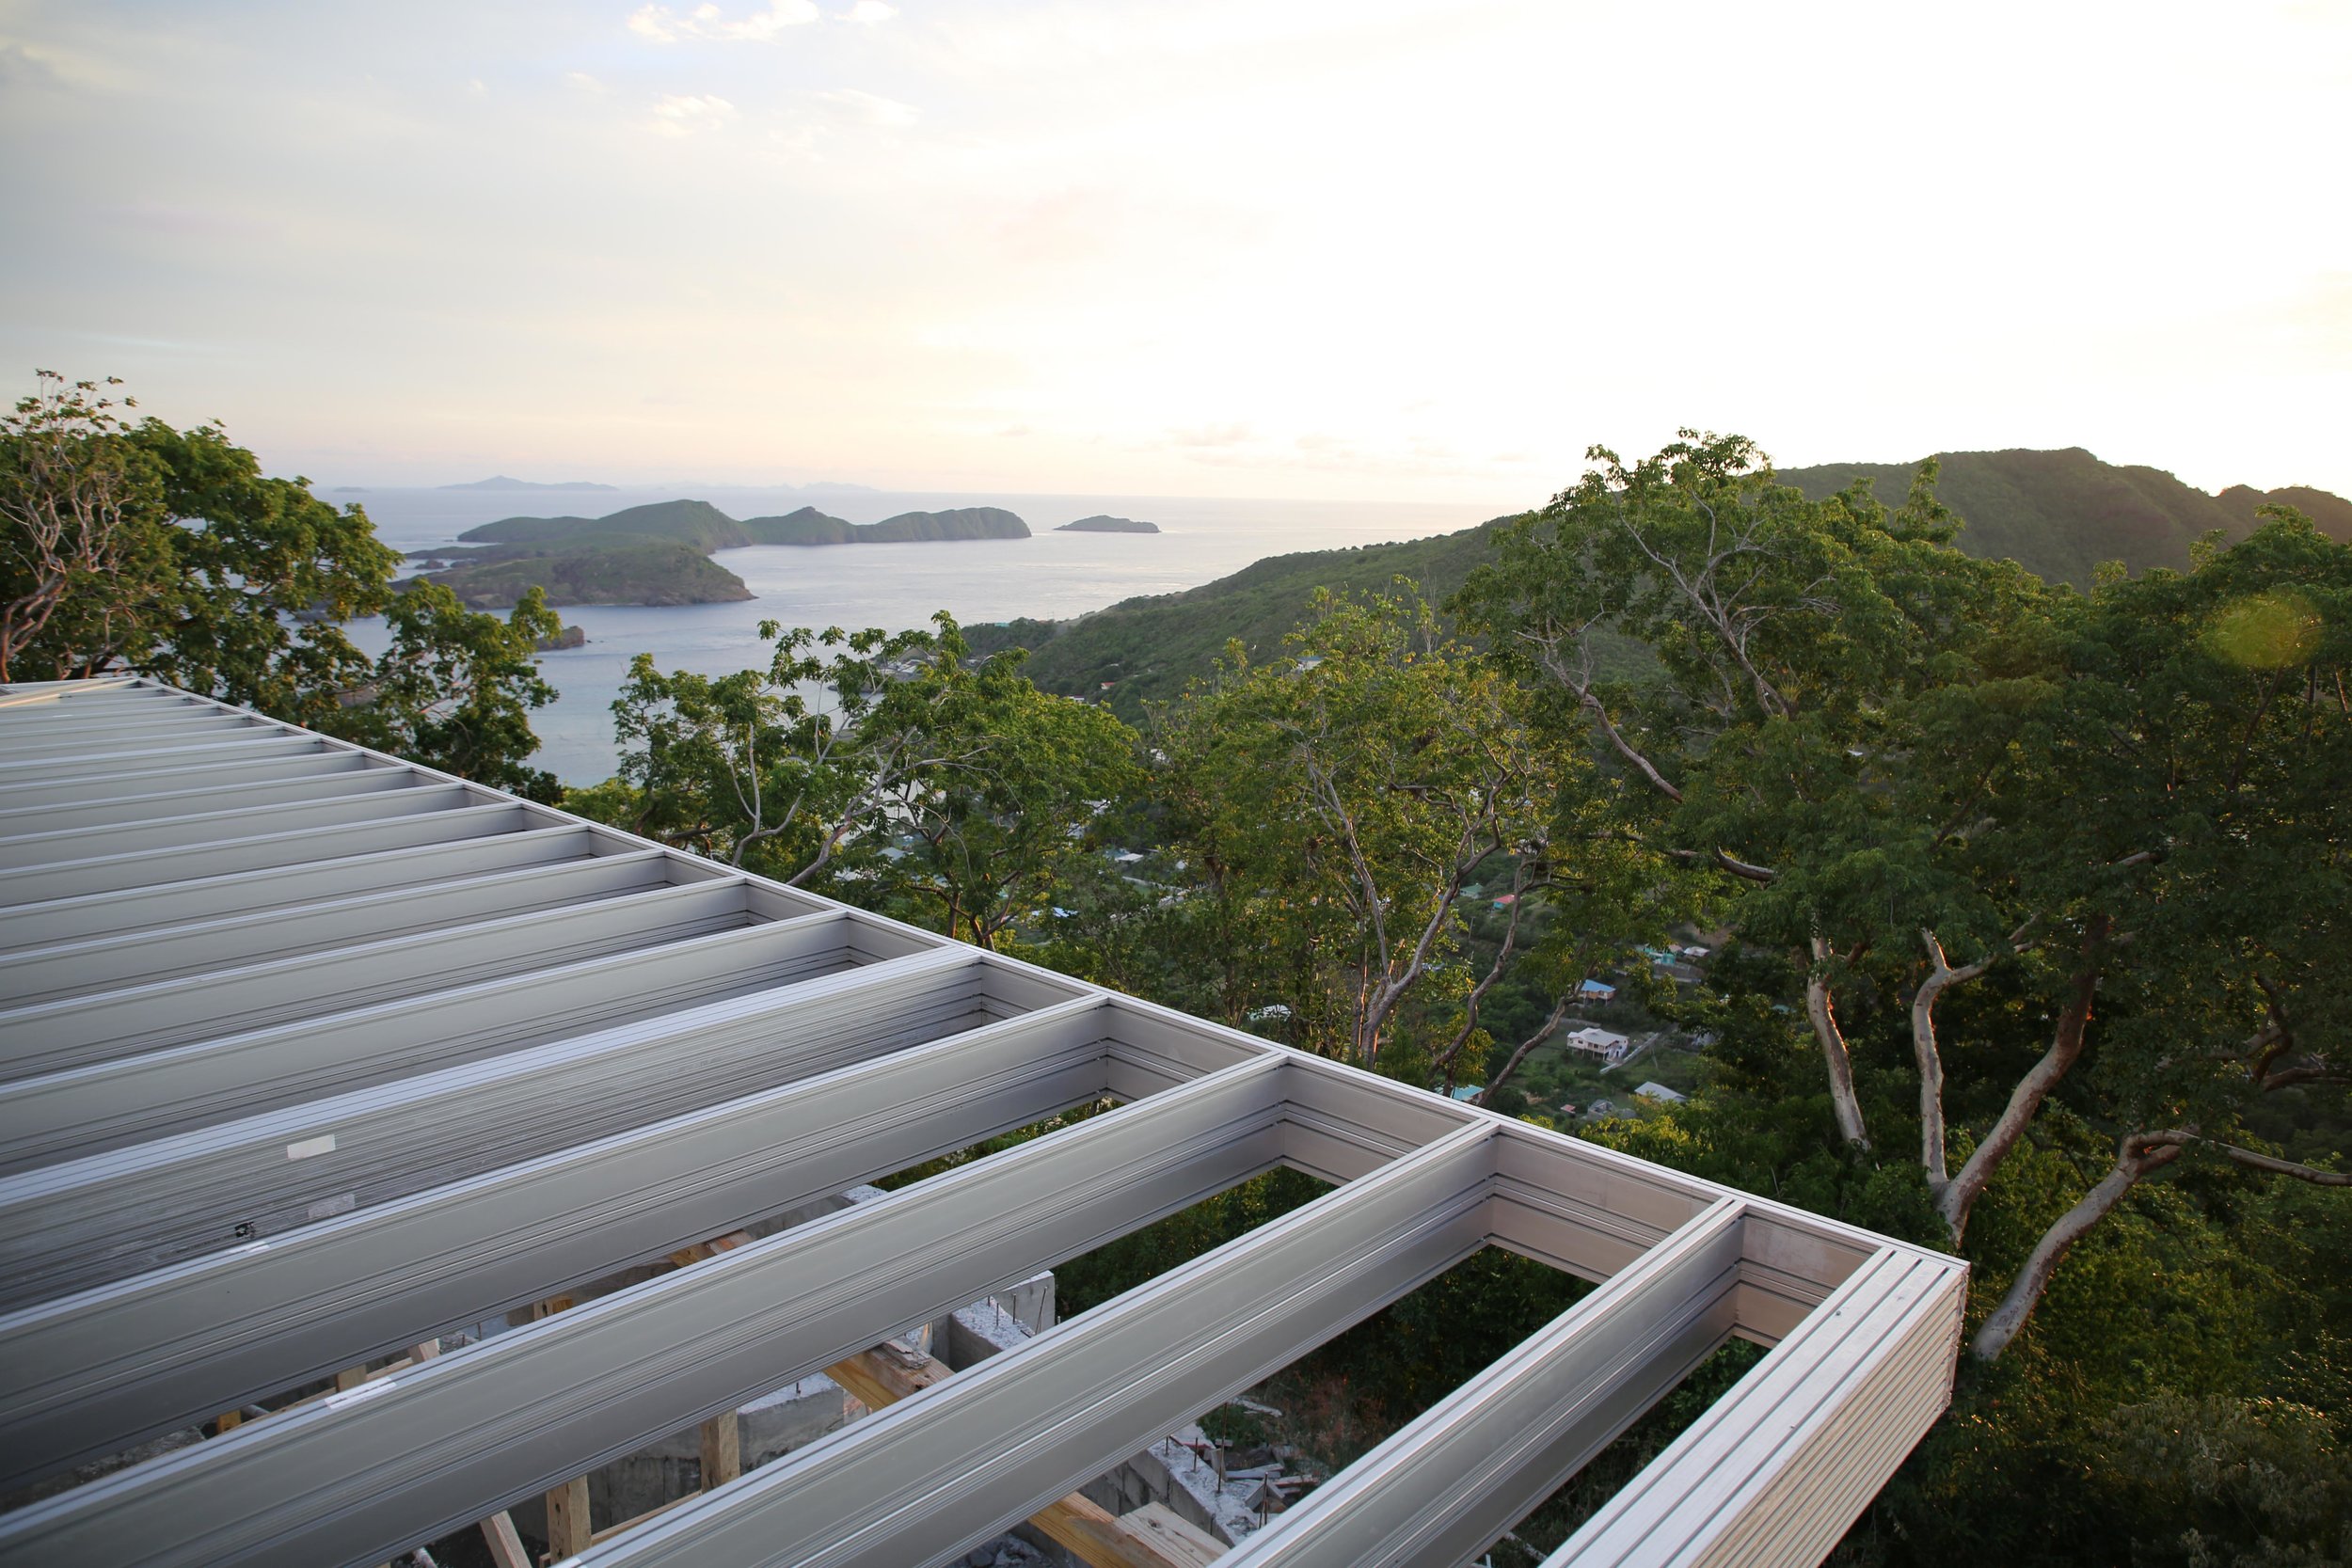 S.E.A.-Studio-Environmental-Architecture-David-Hertz-FAIA-Sail-House-Cloud9-Bequia-Saint-Vincent-Grenadines-Caribbean-Island-sustainable-regenerative-restorative-green-design-hospitality-tropical-resort-hotel-biomimetic-tensile-structure-progress-7.jpg